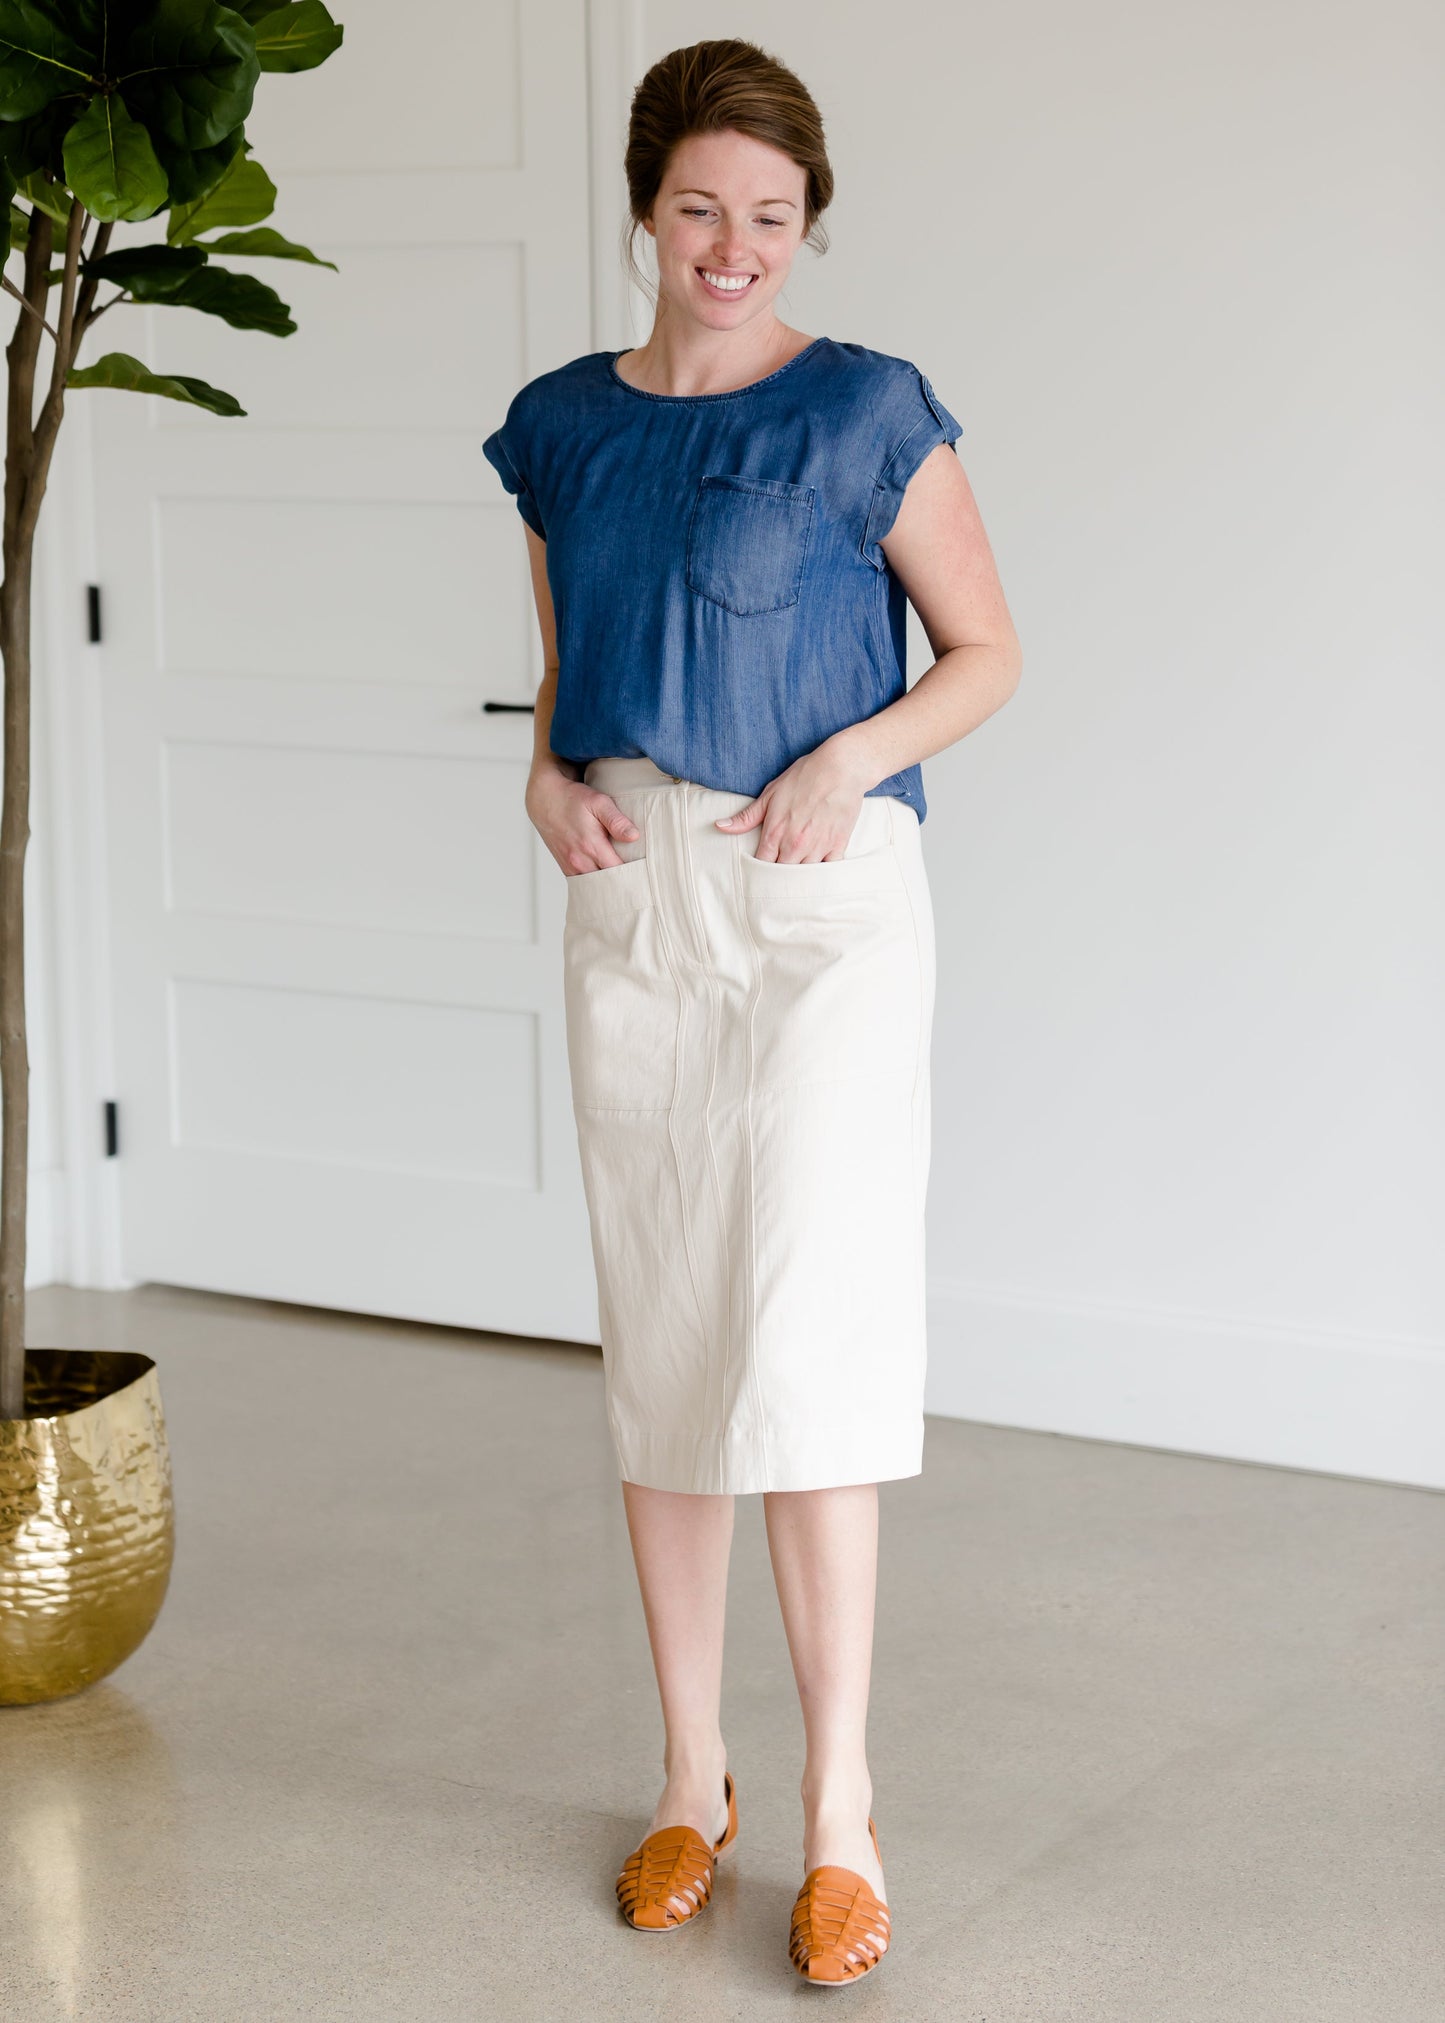 Khaki Pocket Midi Skirt - FINAL SALE Skirts